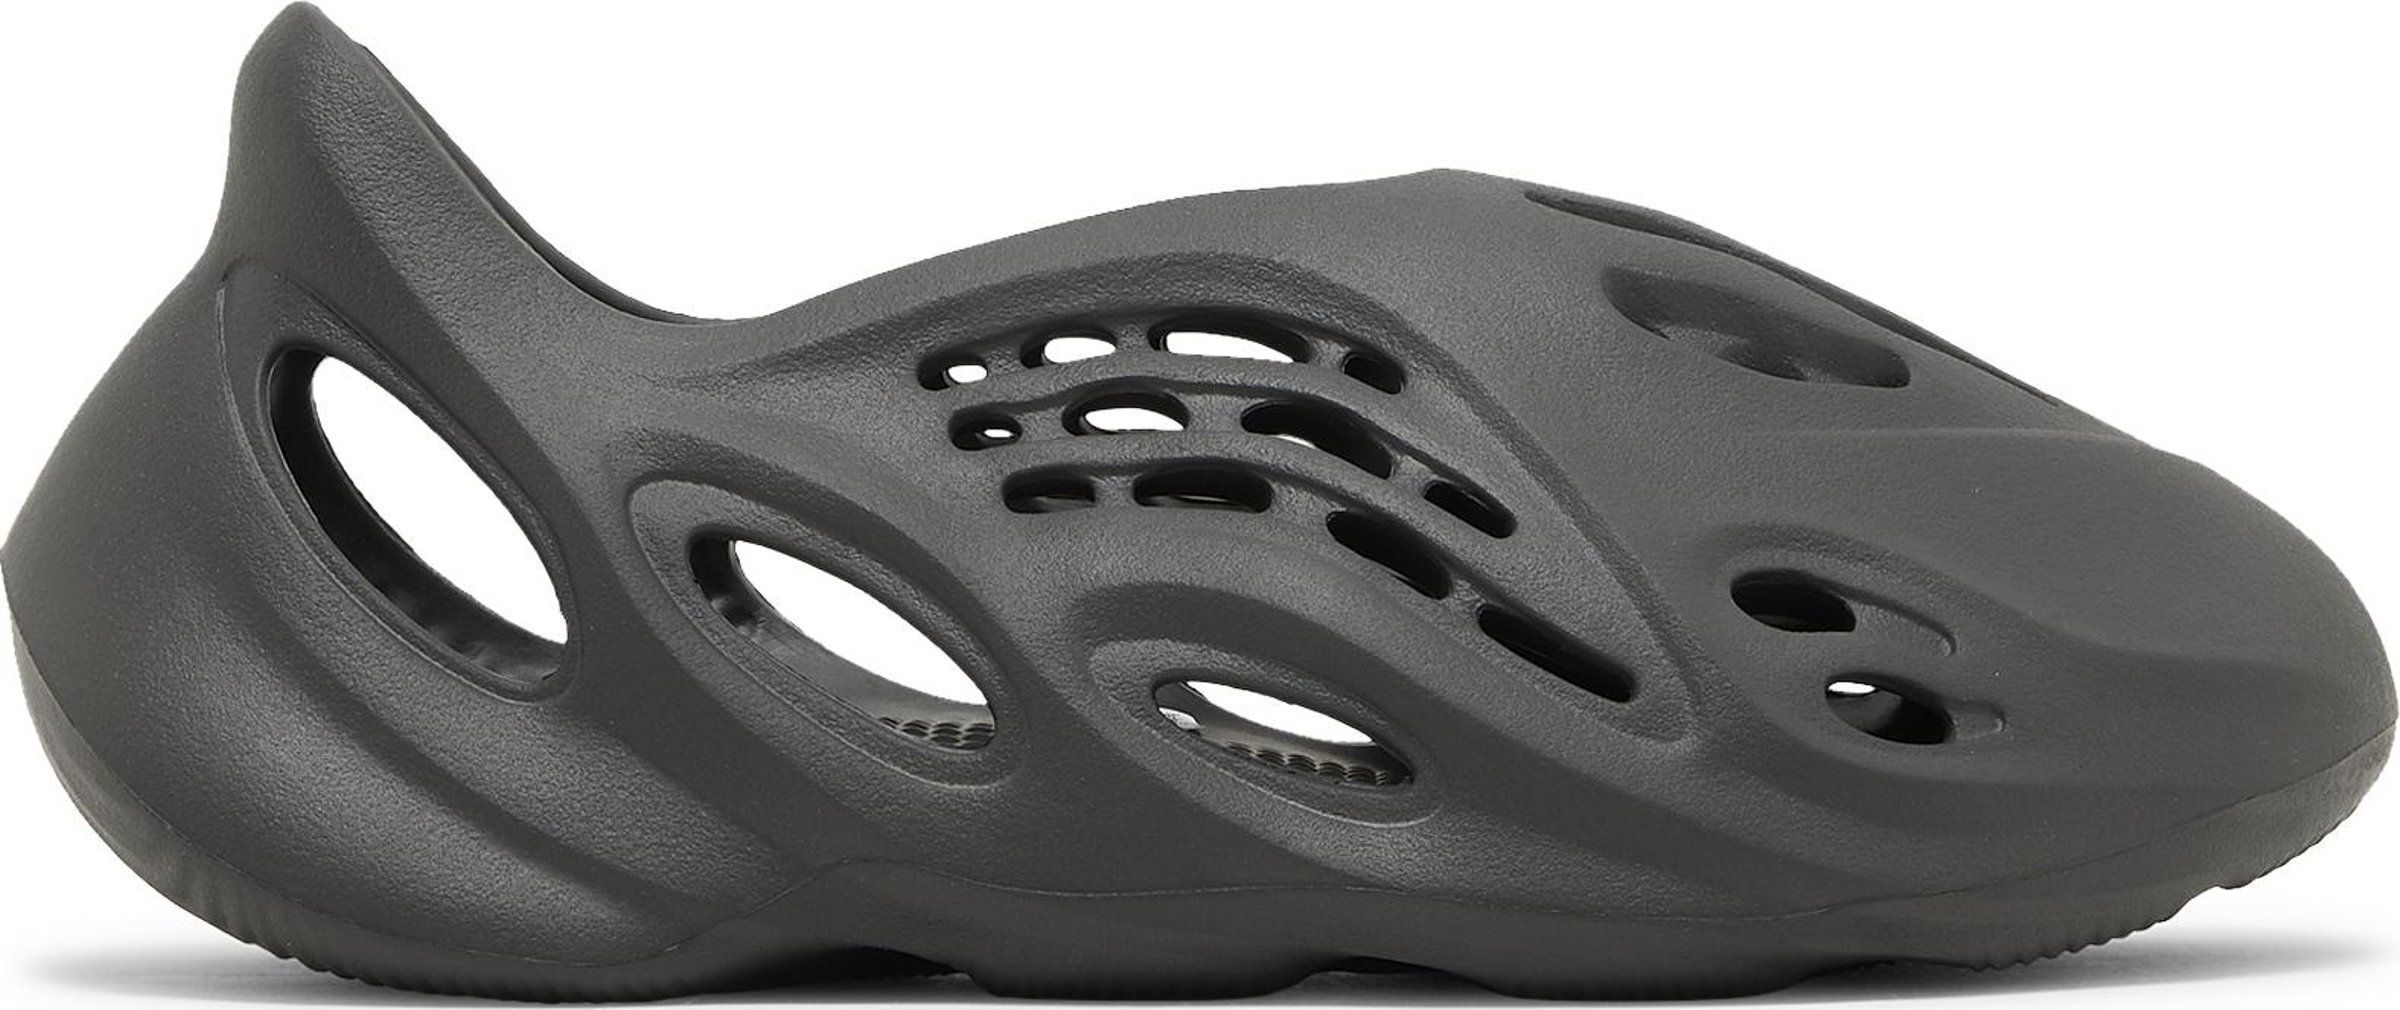 Buy Yeezy Foam Runner 'Carbon' - IG5349 | GOAT NL